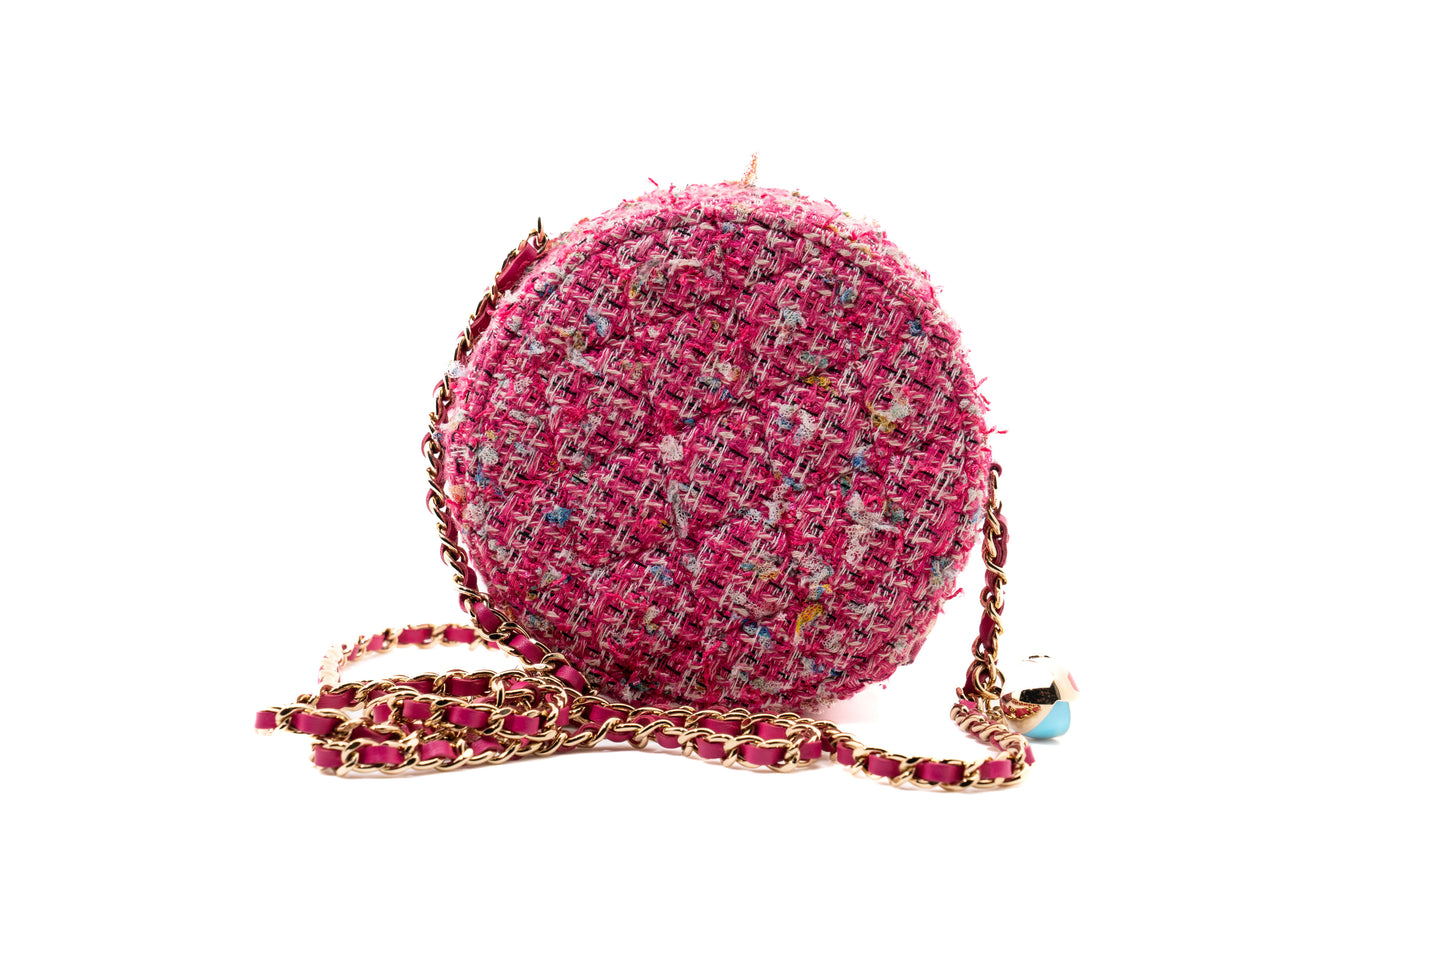 Chanel Tweed Handbag in Pink GHW